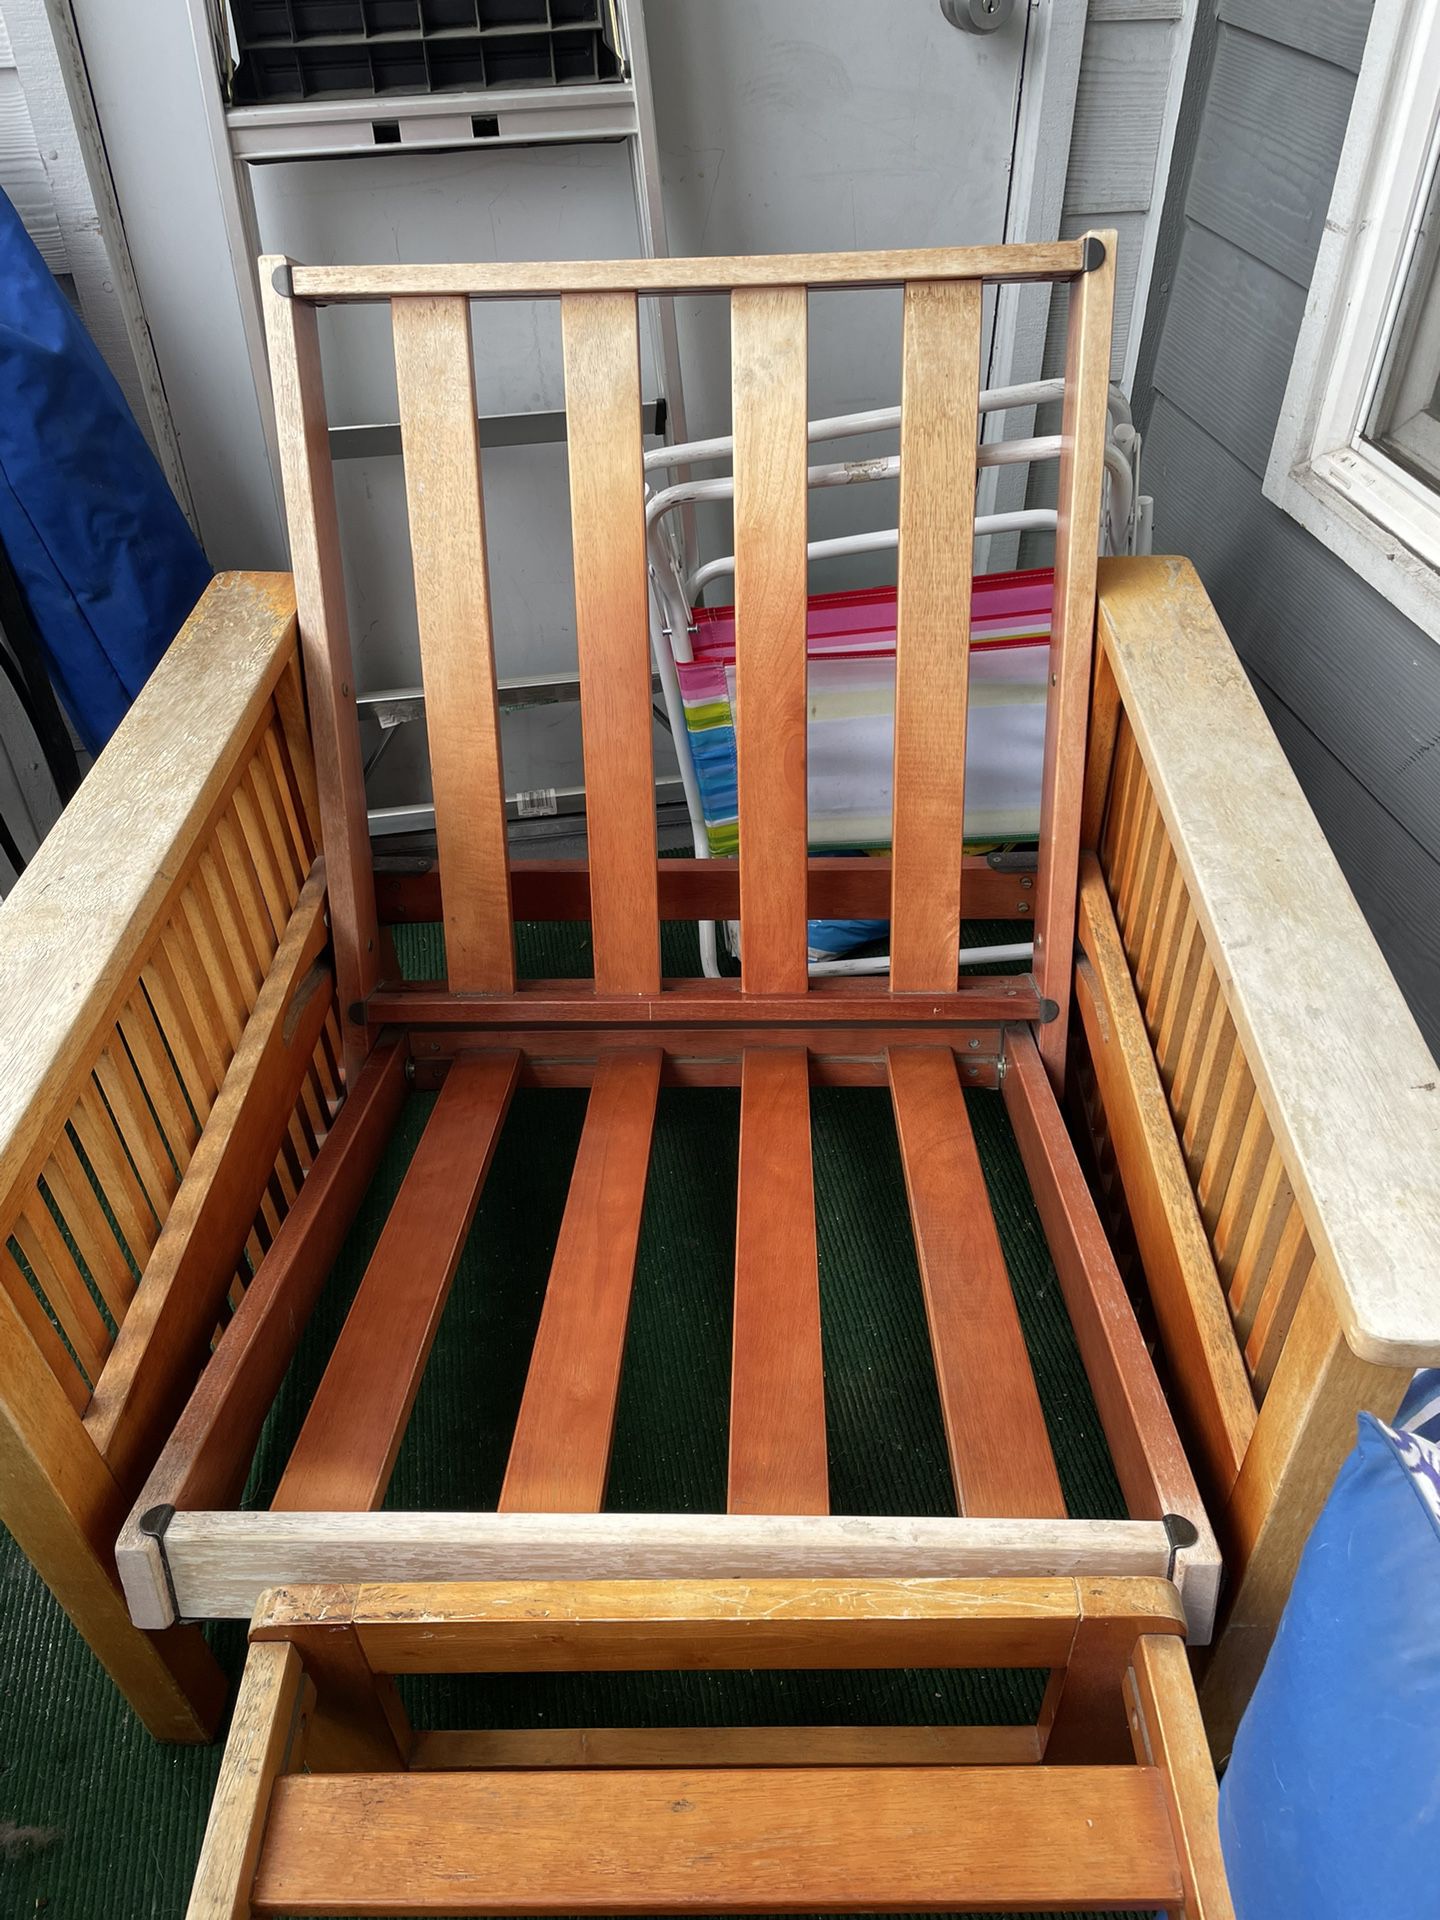 Outdoor Wooden Chair